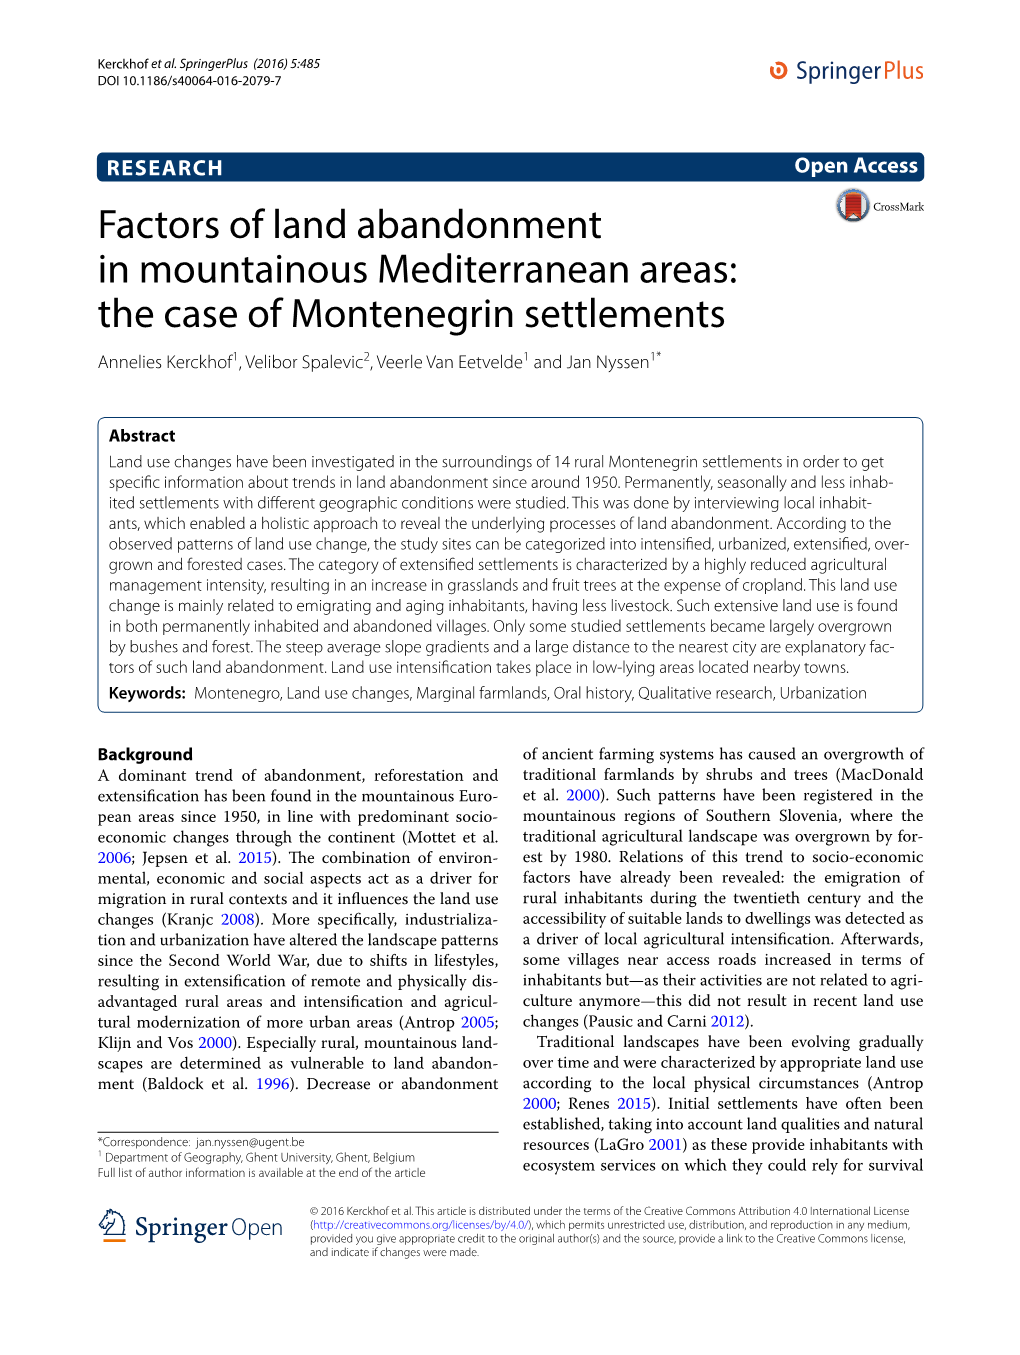 Factors of Land Abandonment in Mountainous Mediterranean Areas